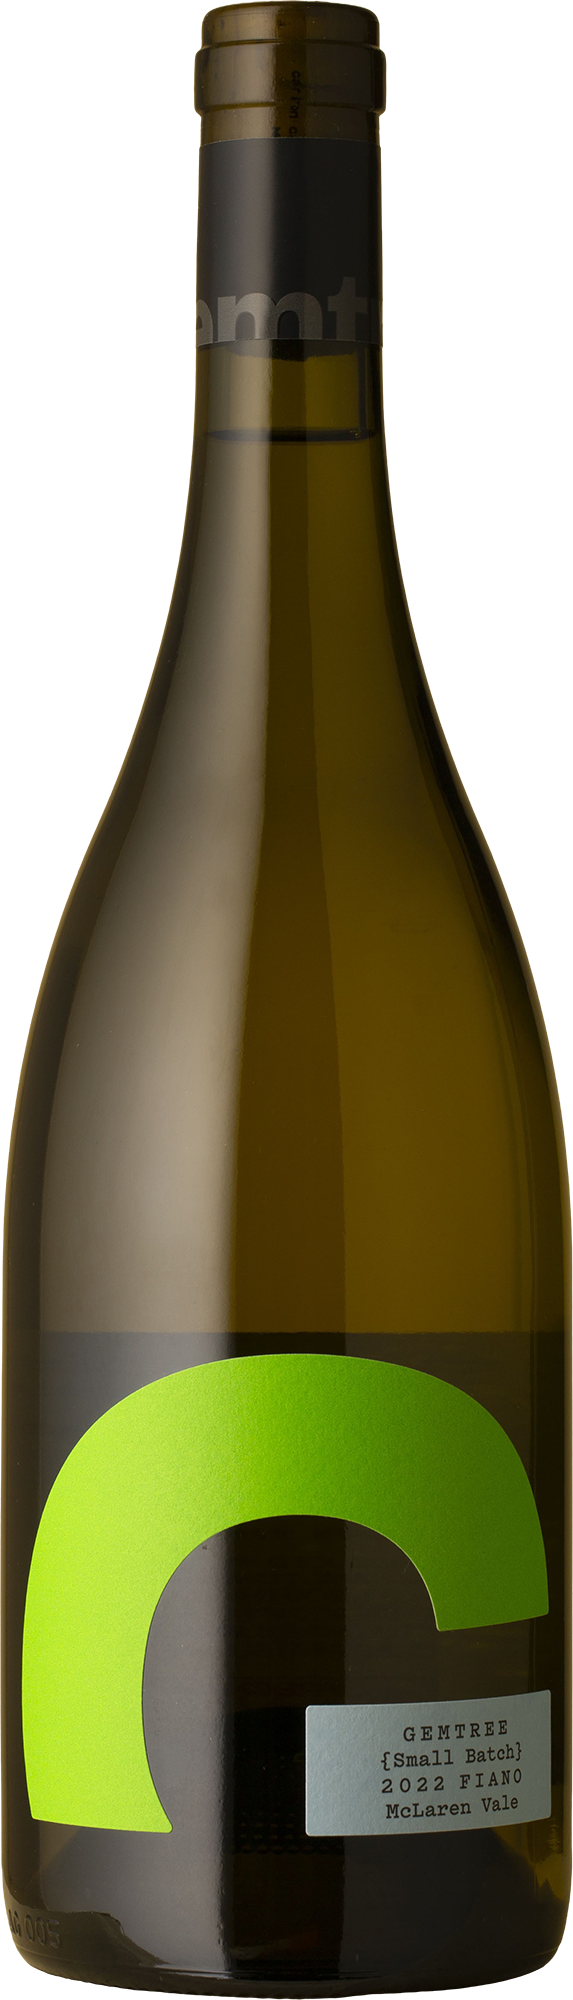 Gemtree - Small Batch Fiano 2022 White Wine